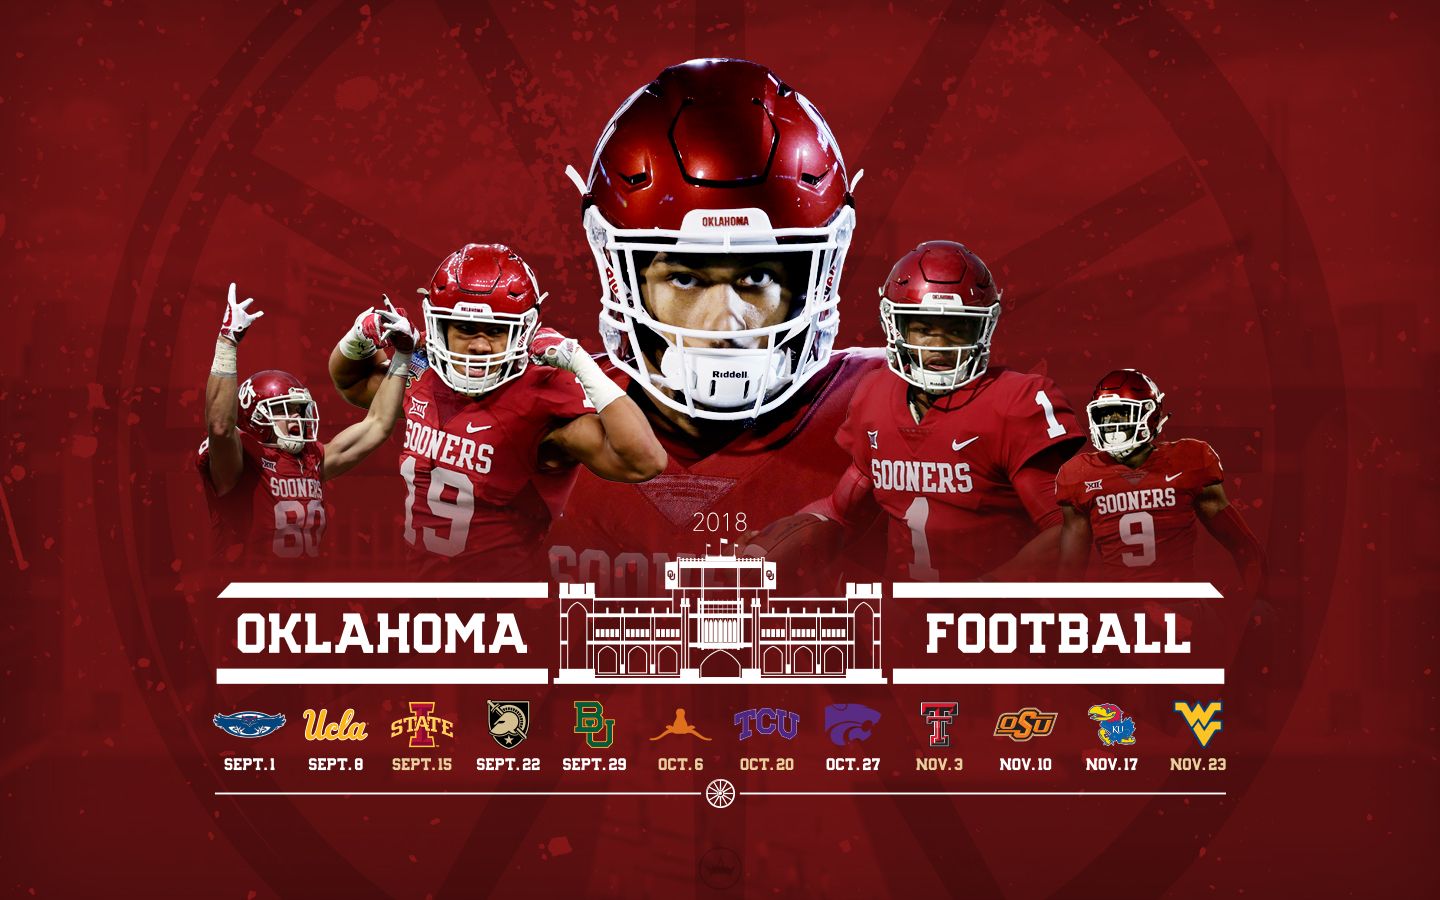 2019 Oklahoma Football Schedule: Downloadable Wallpaper